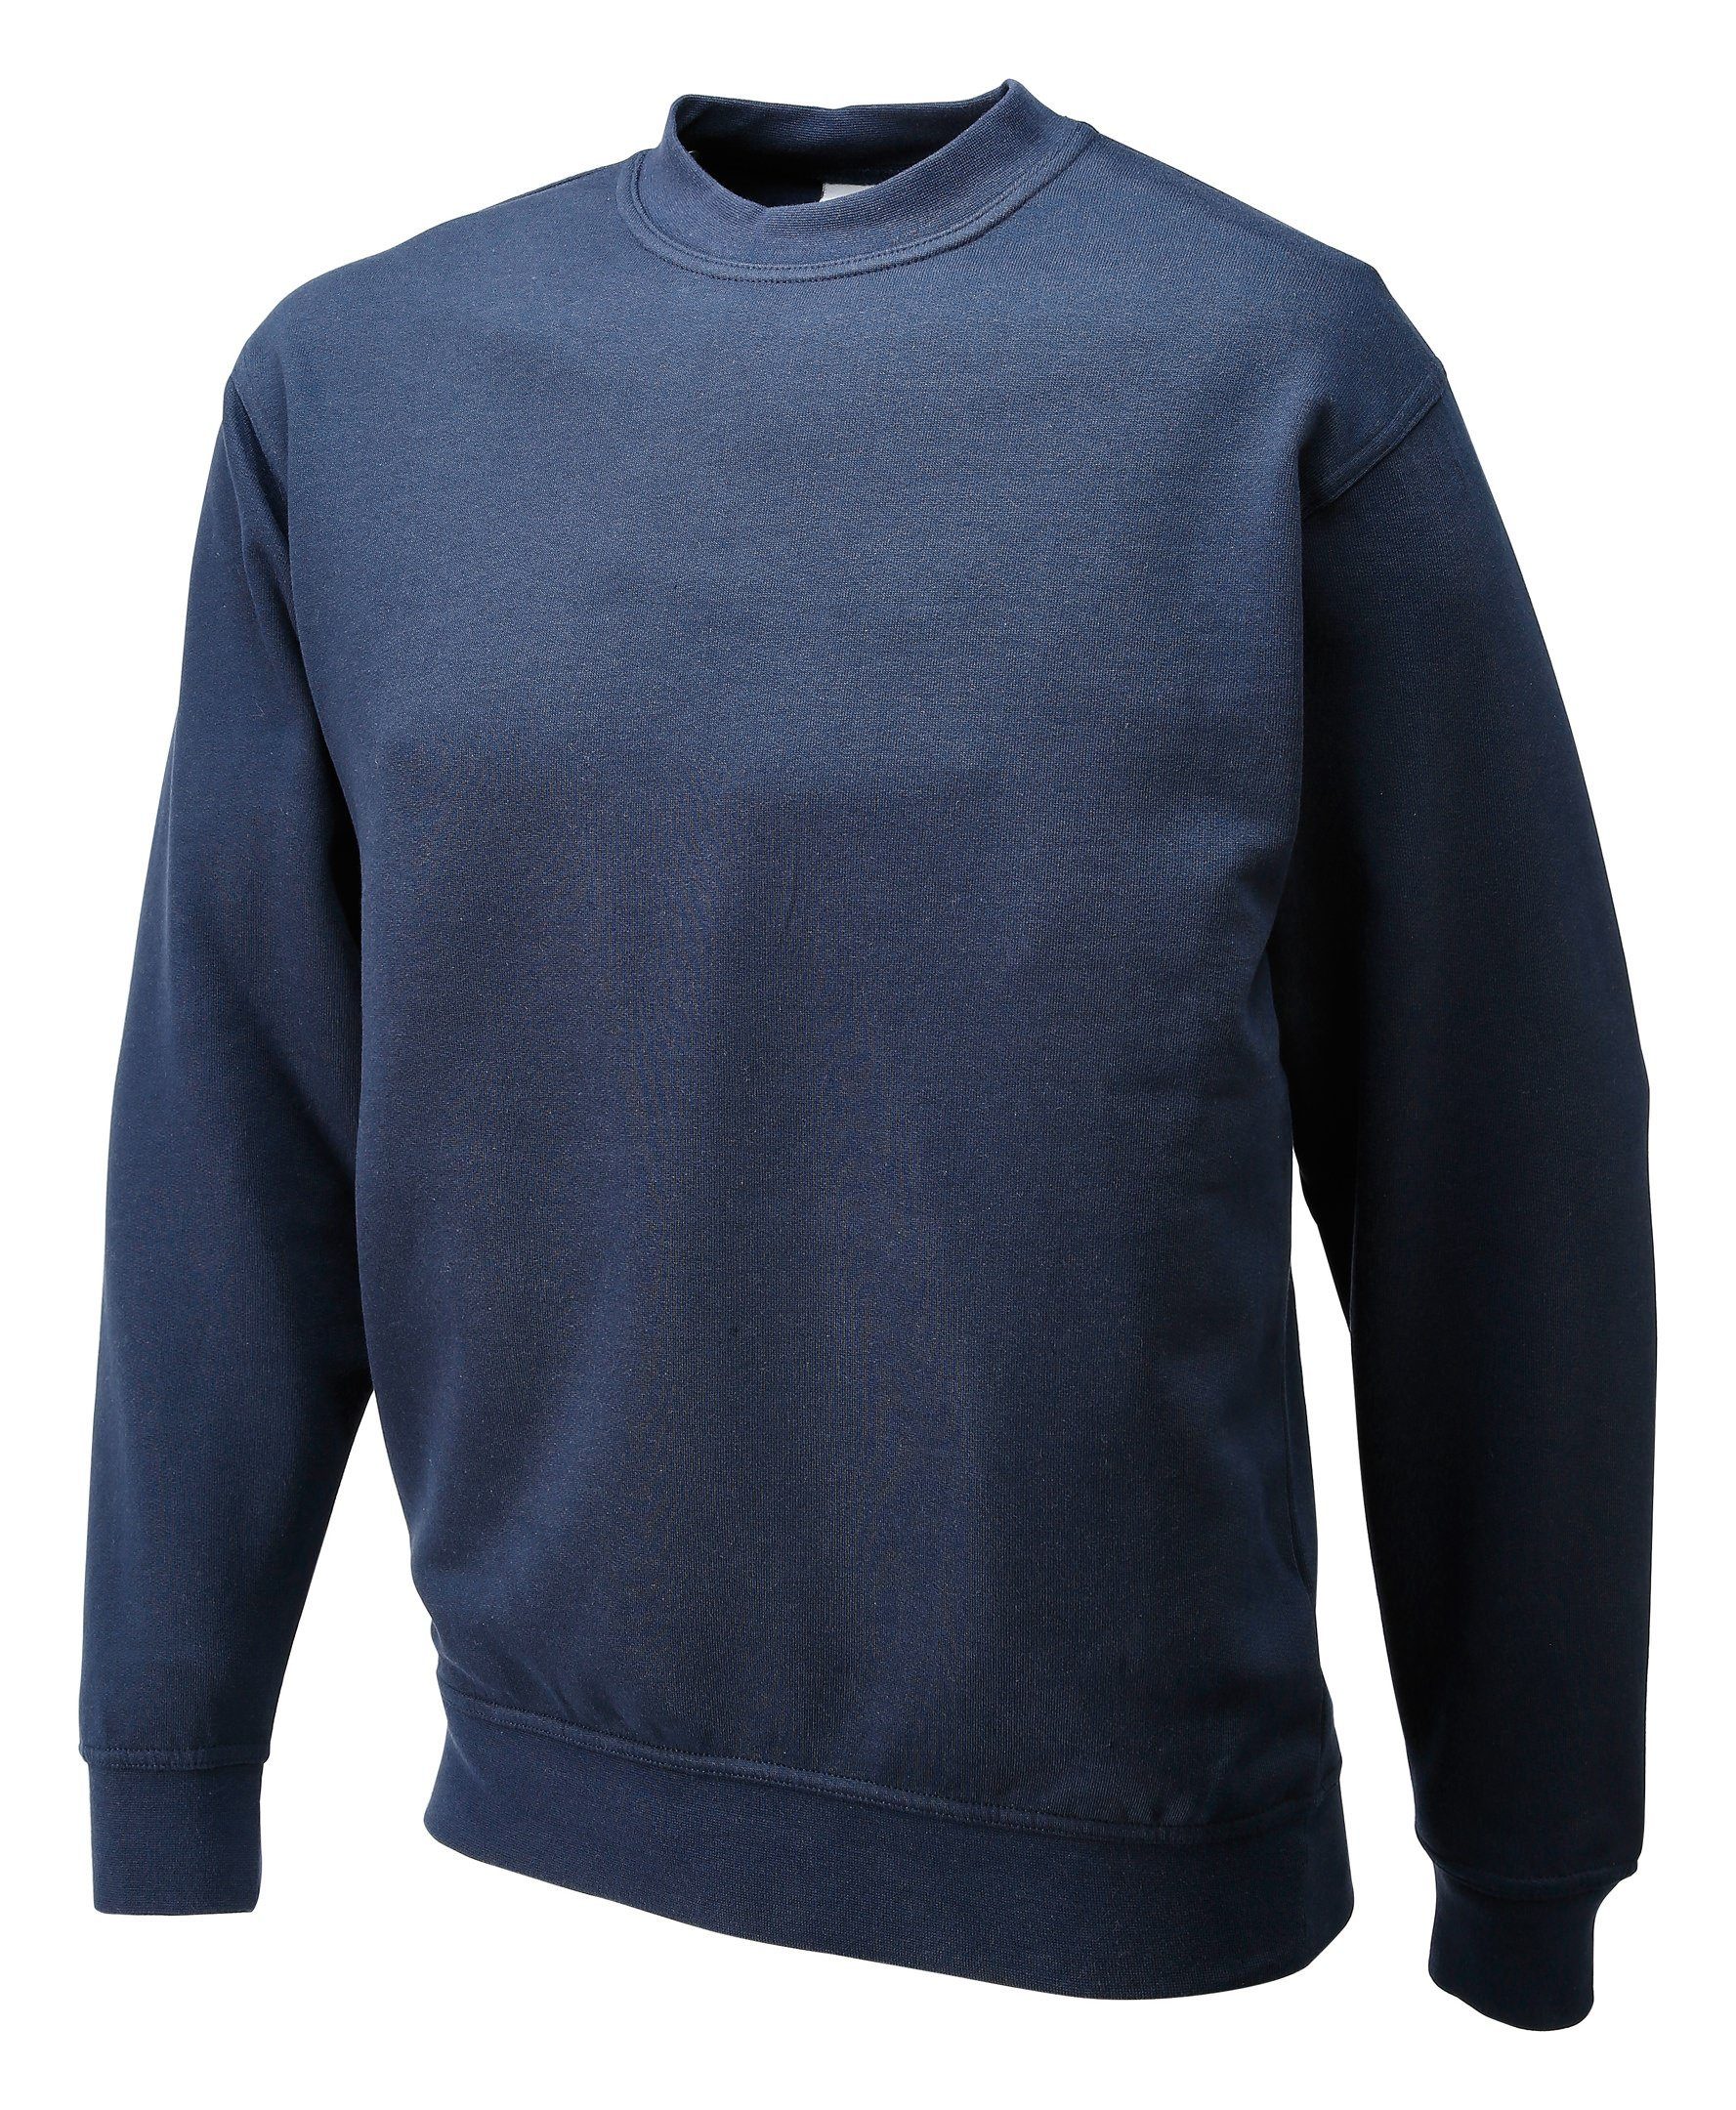 Promodoro Sweatshirt Розмір XXXL navy